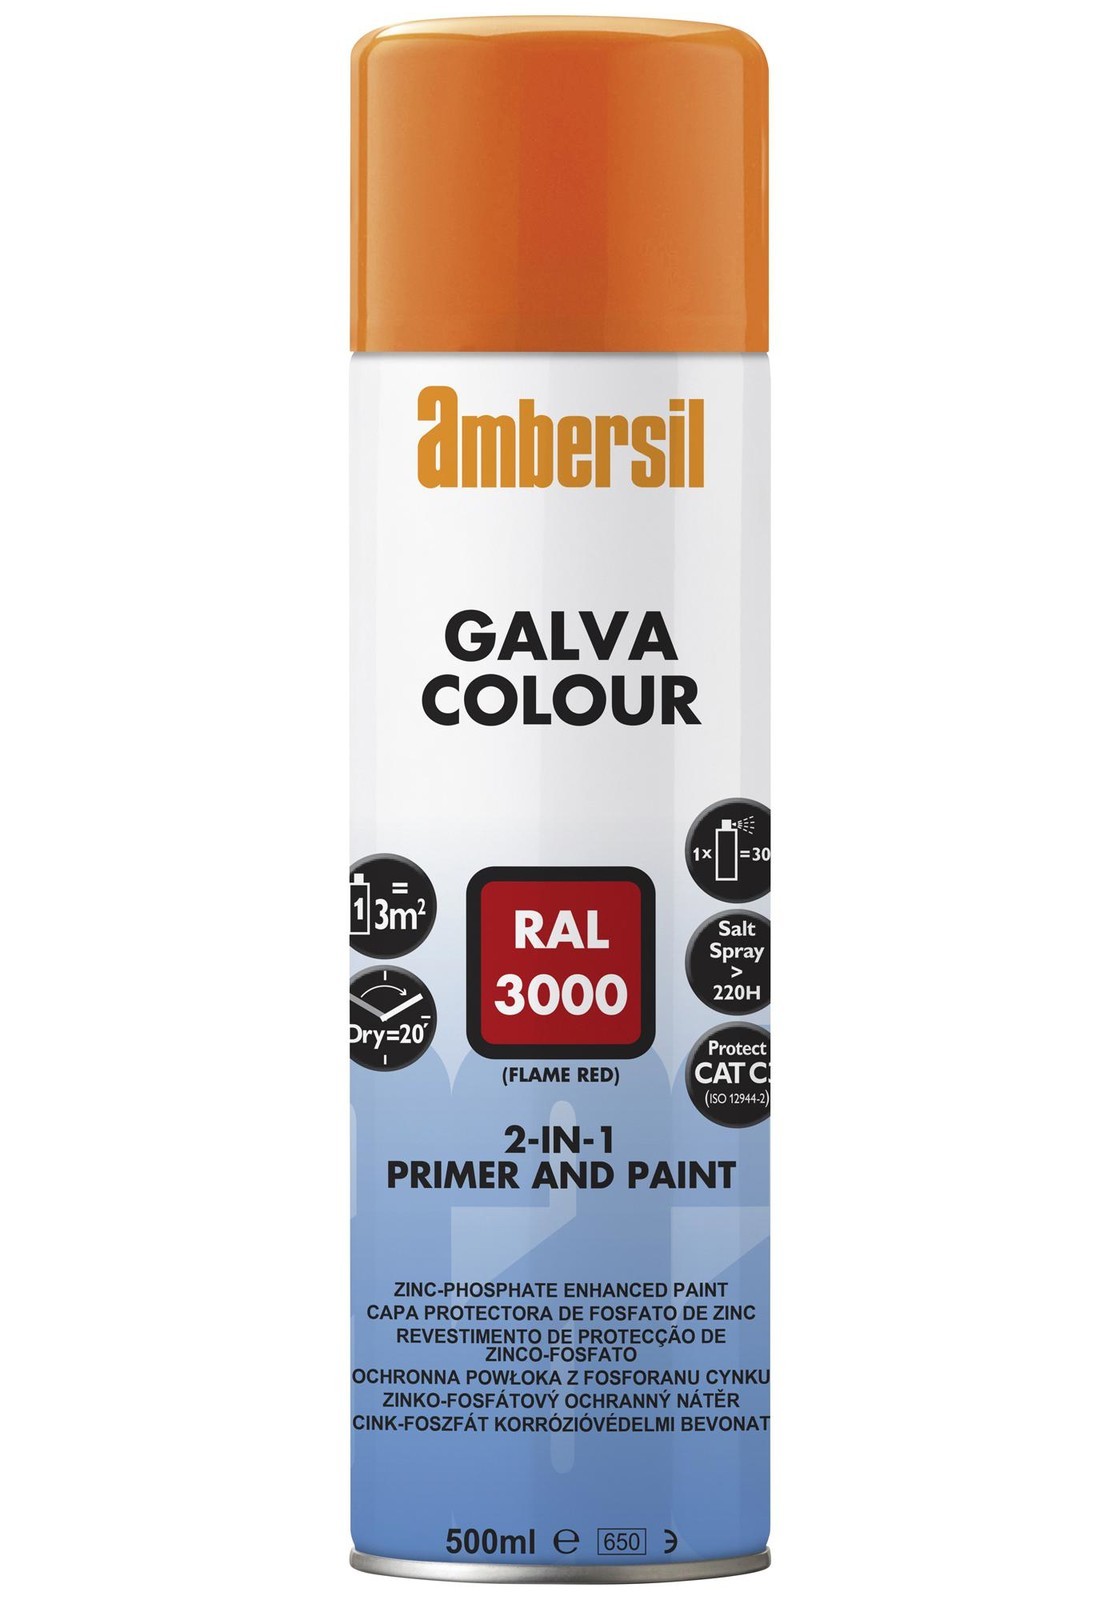 Ambersil Galva Colour Red Ral 3000, 500Ml Coating, Aerosol, 500Ml